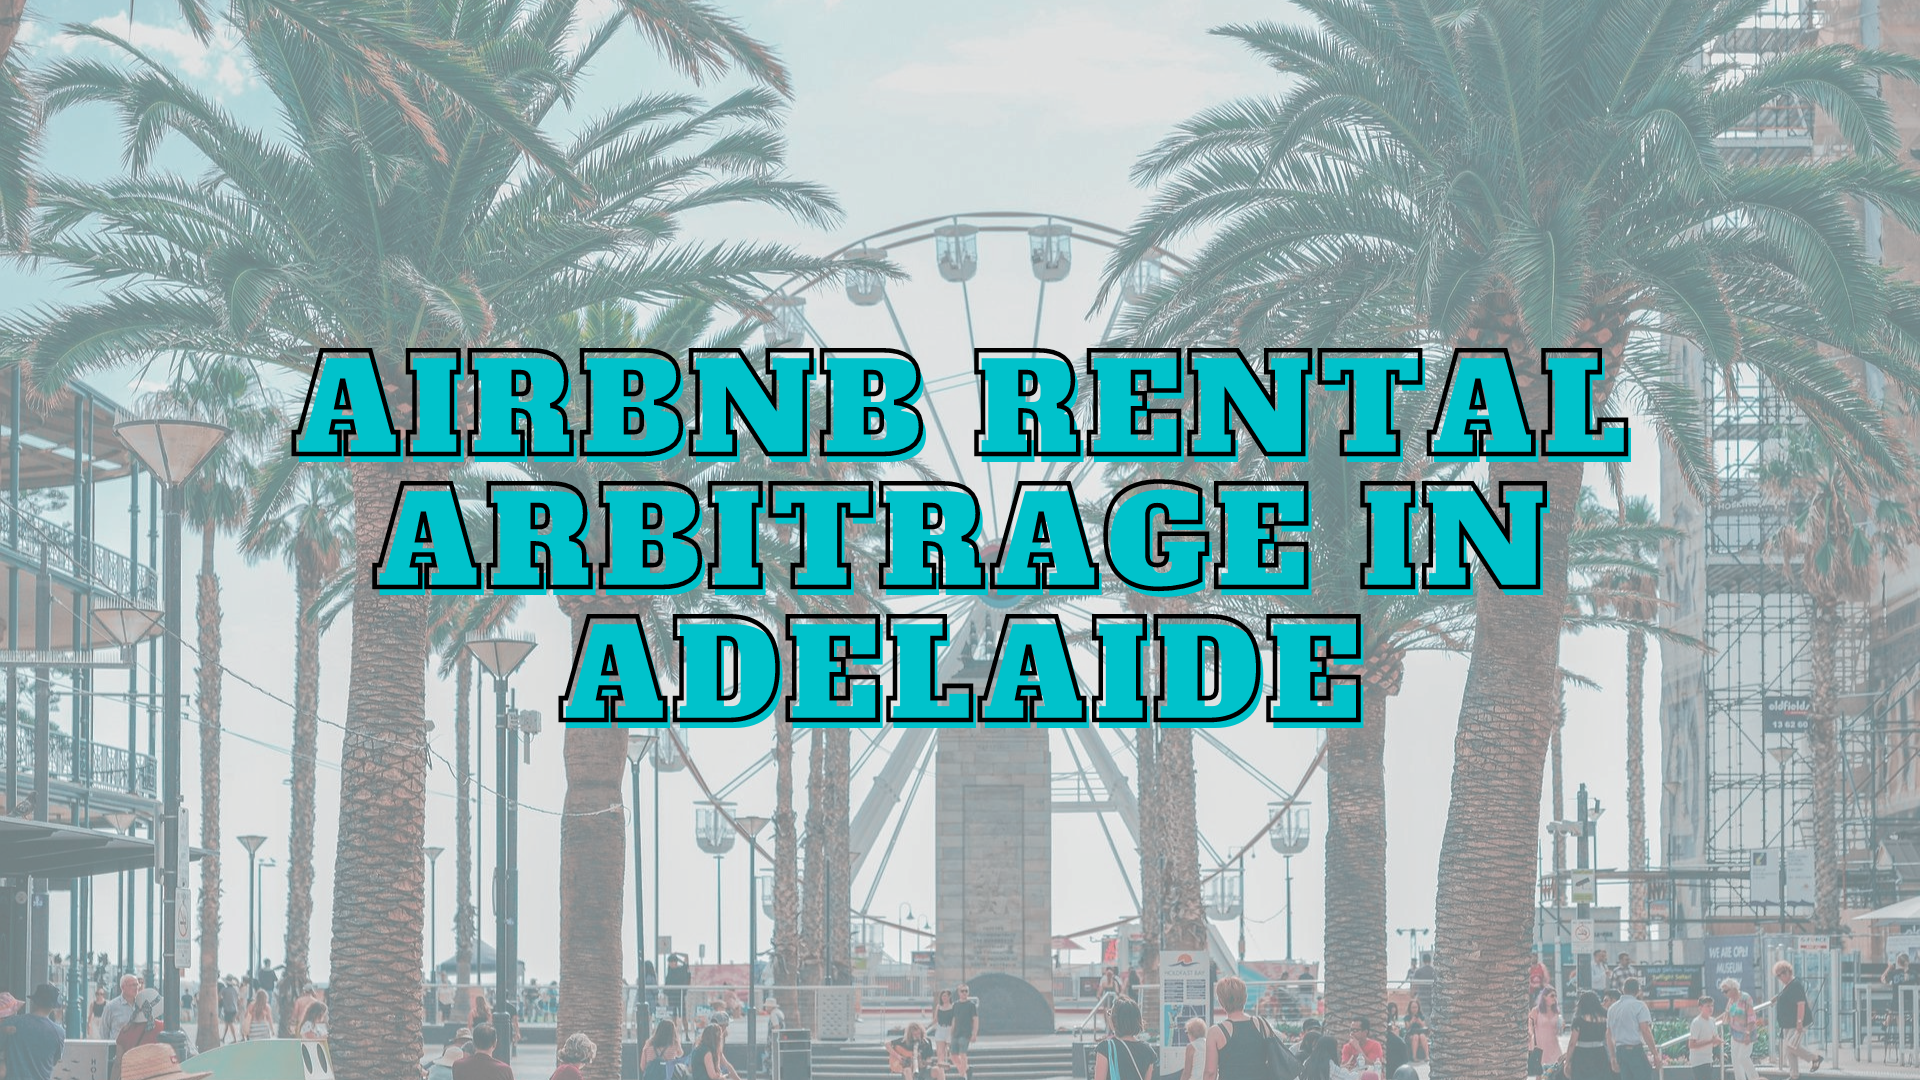 Adelaide airbnb rental arbitrage